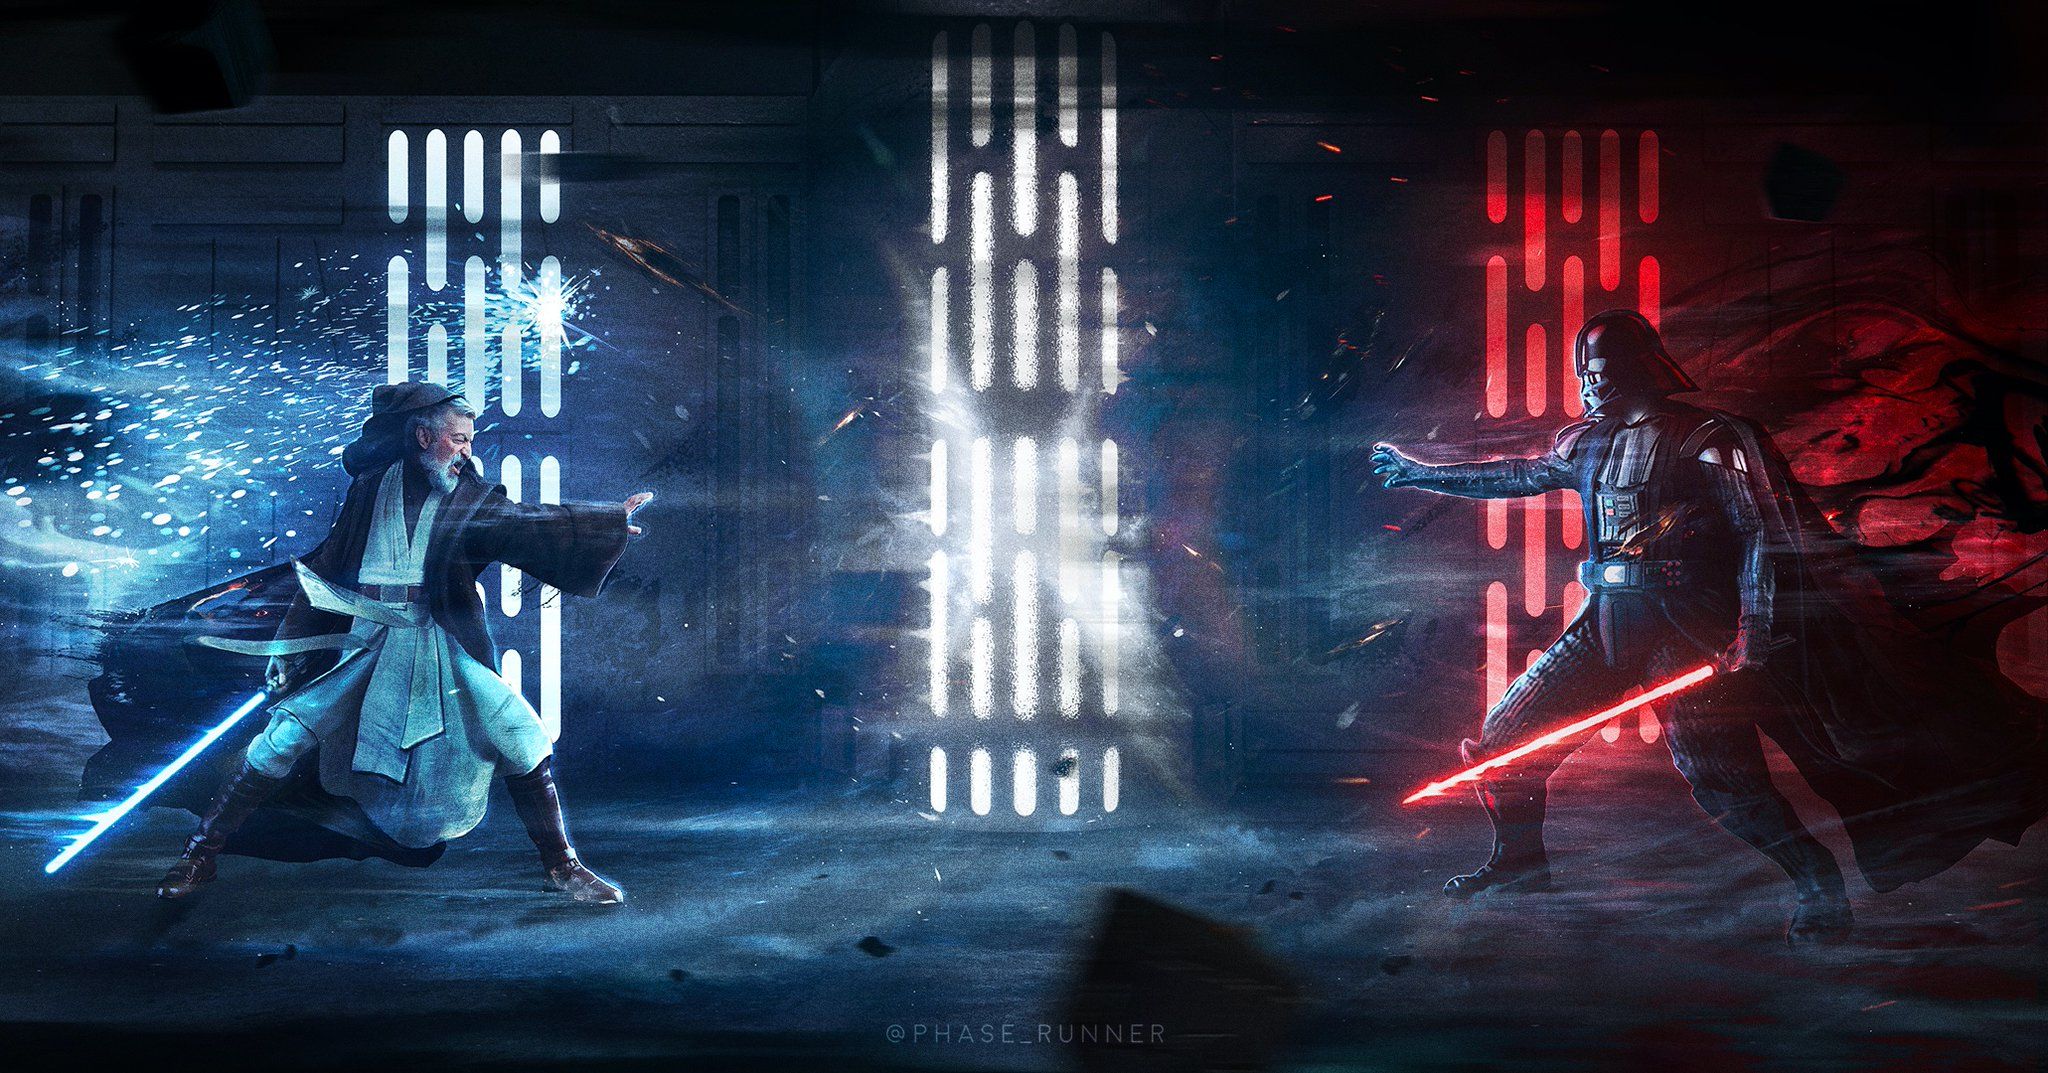 Obi-Wan Kenobi And Anakin Skywalker Wallpapers